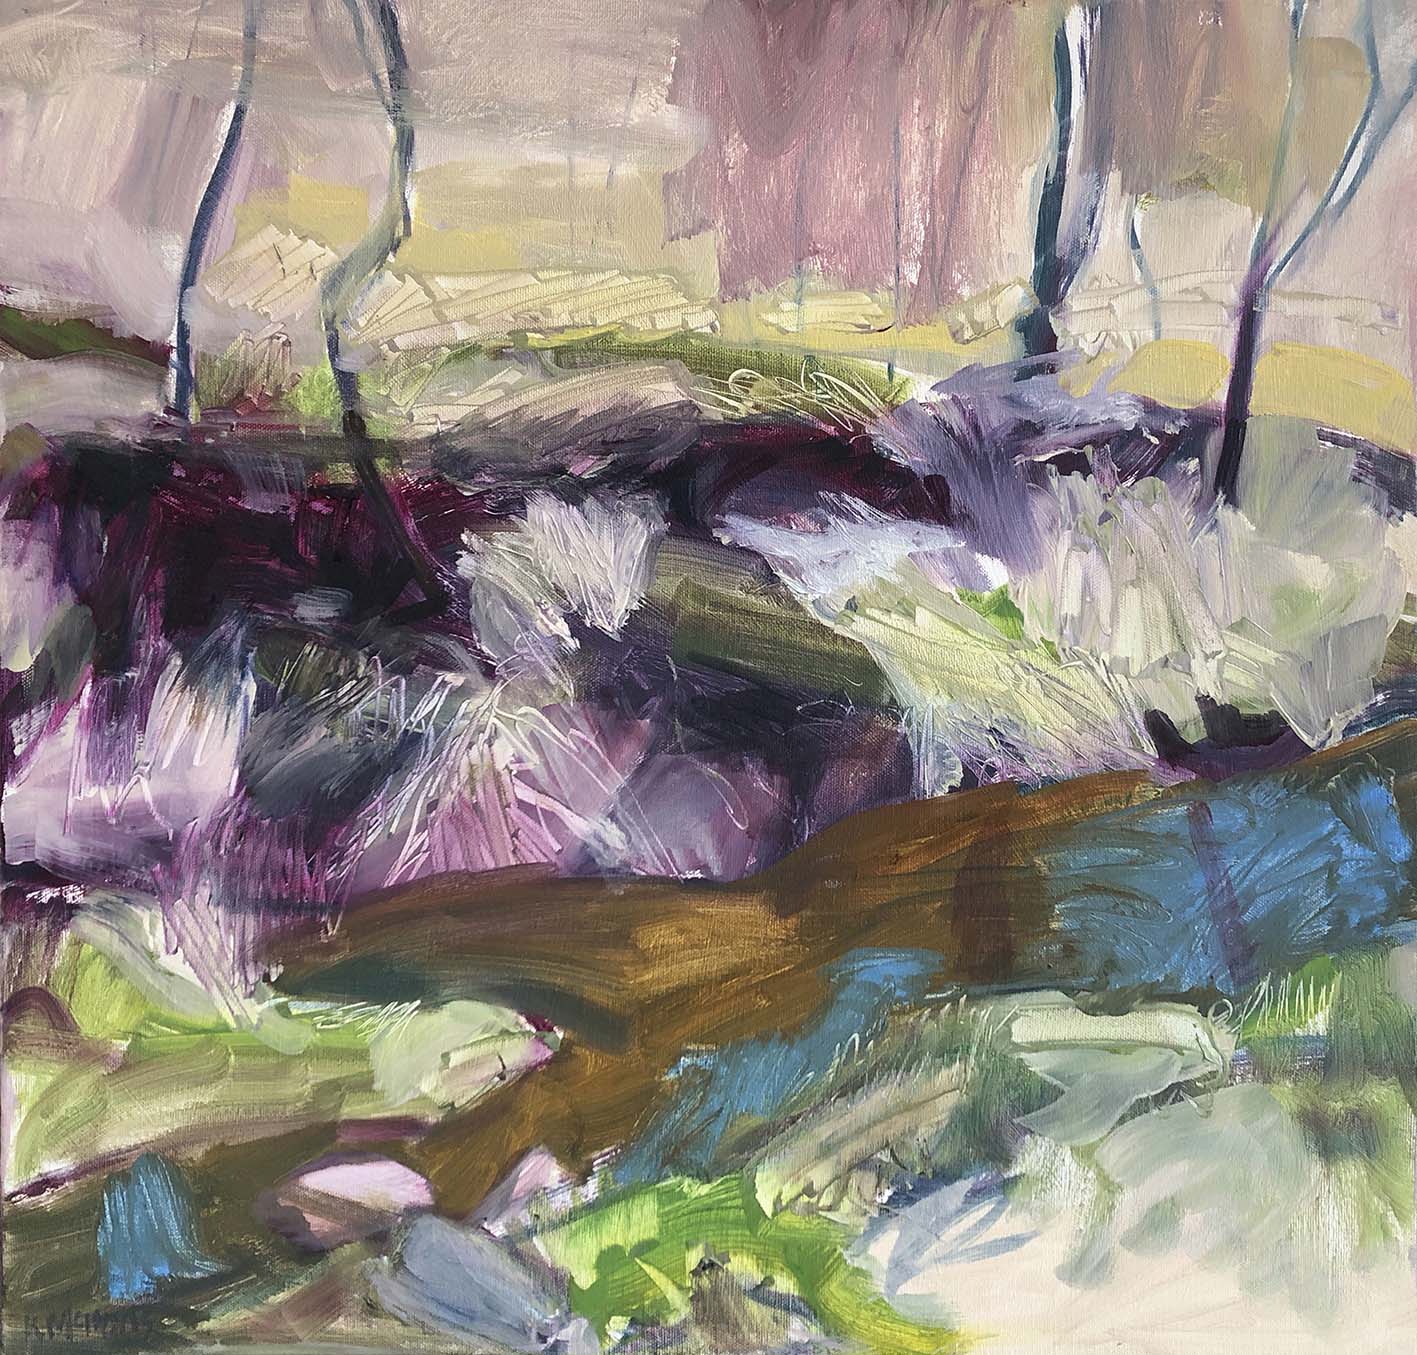 Kerry McInnis 'Poa Grass Bank' oil on canvas 50 x 50cm